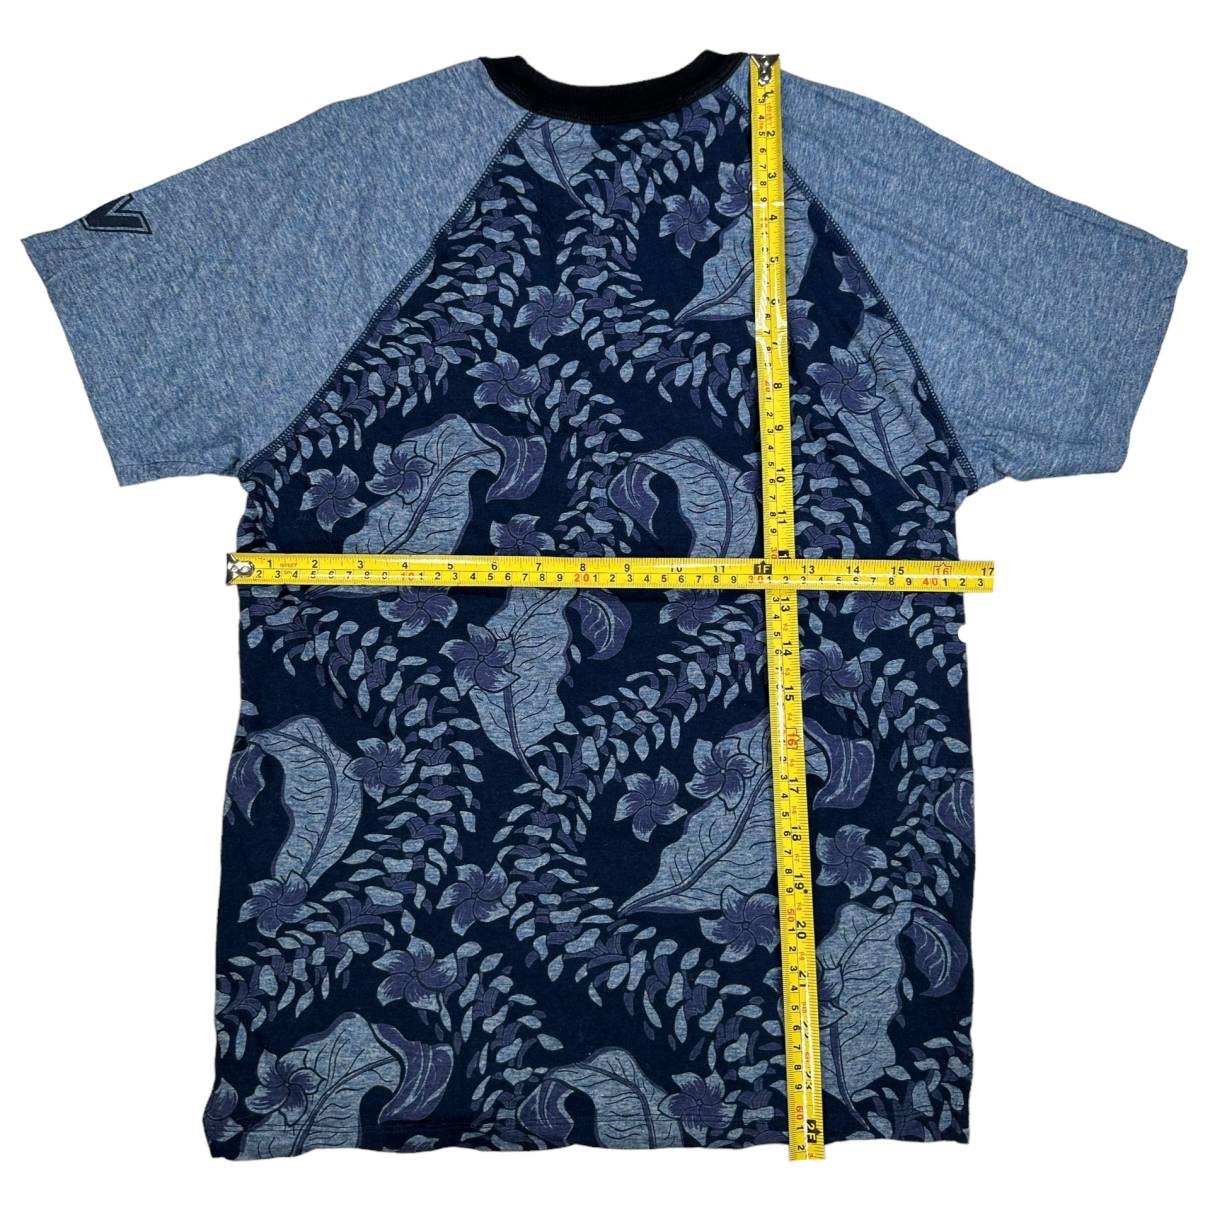 Louis Vuitton - Authenticated T-Shirt - Cotton Blue Floral for Men, Very Good Condition